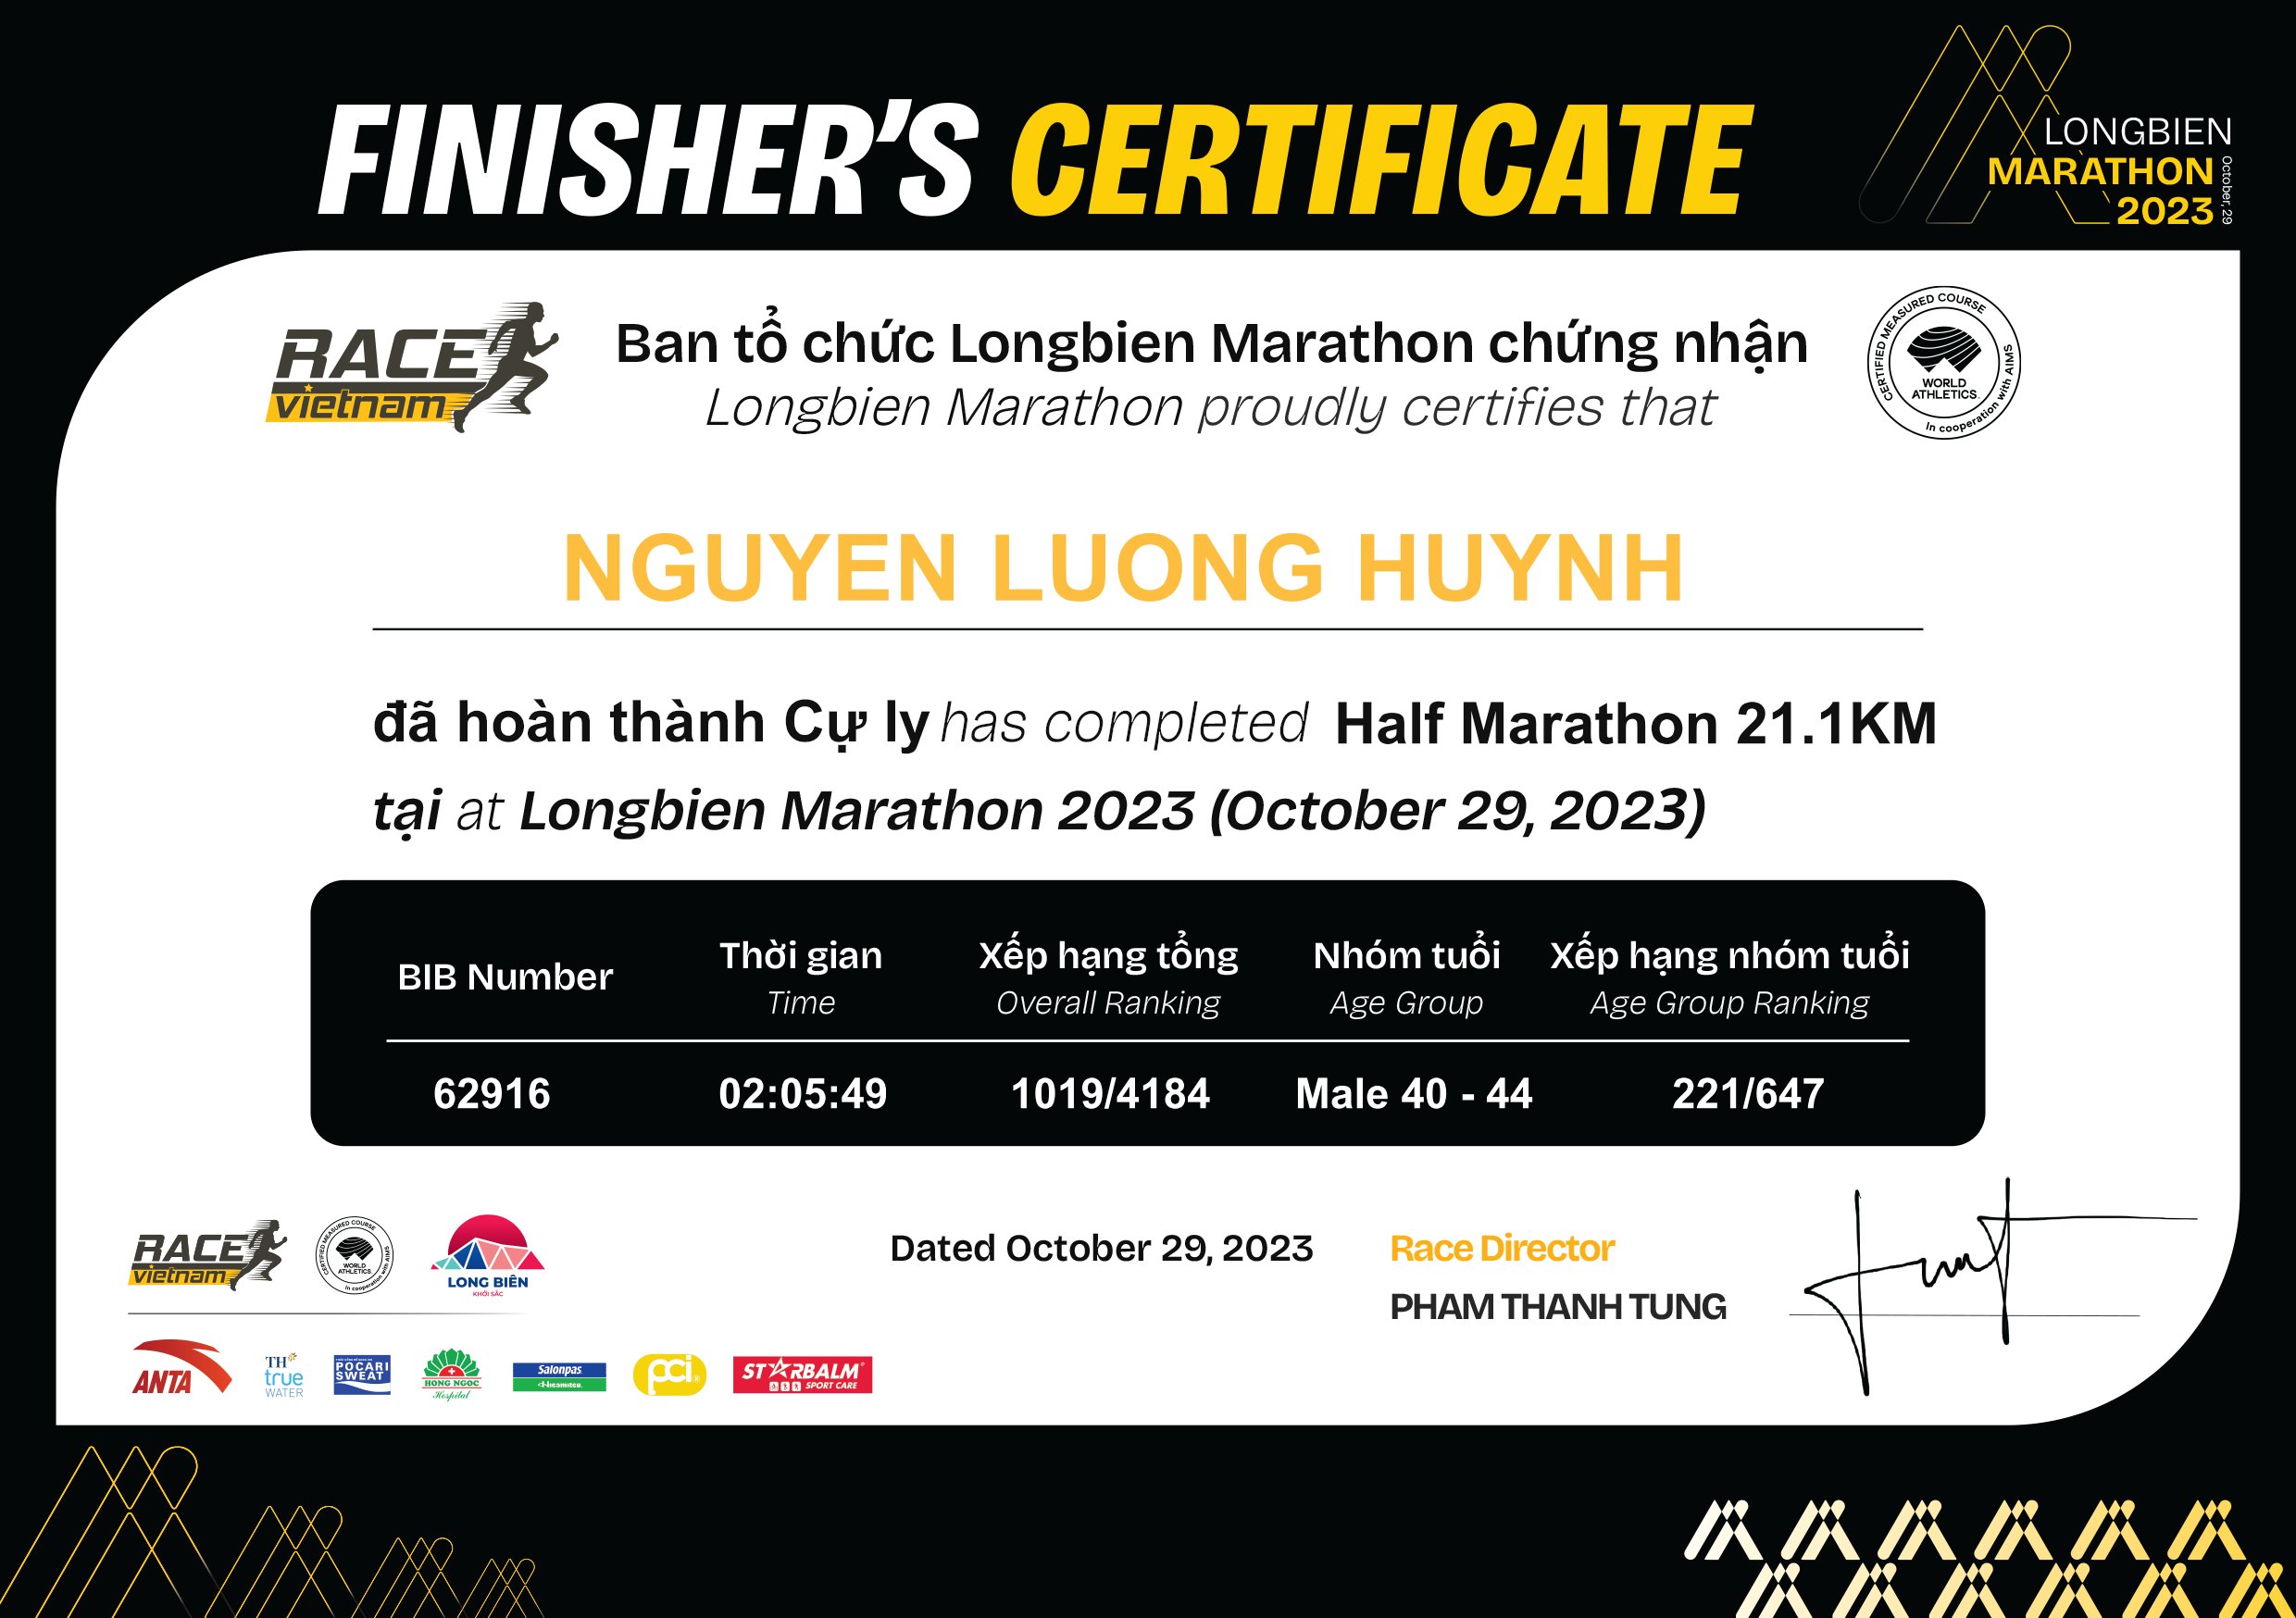 62916 - Nguyen Luong Huynh